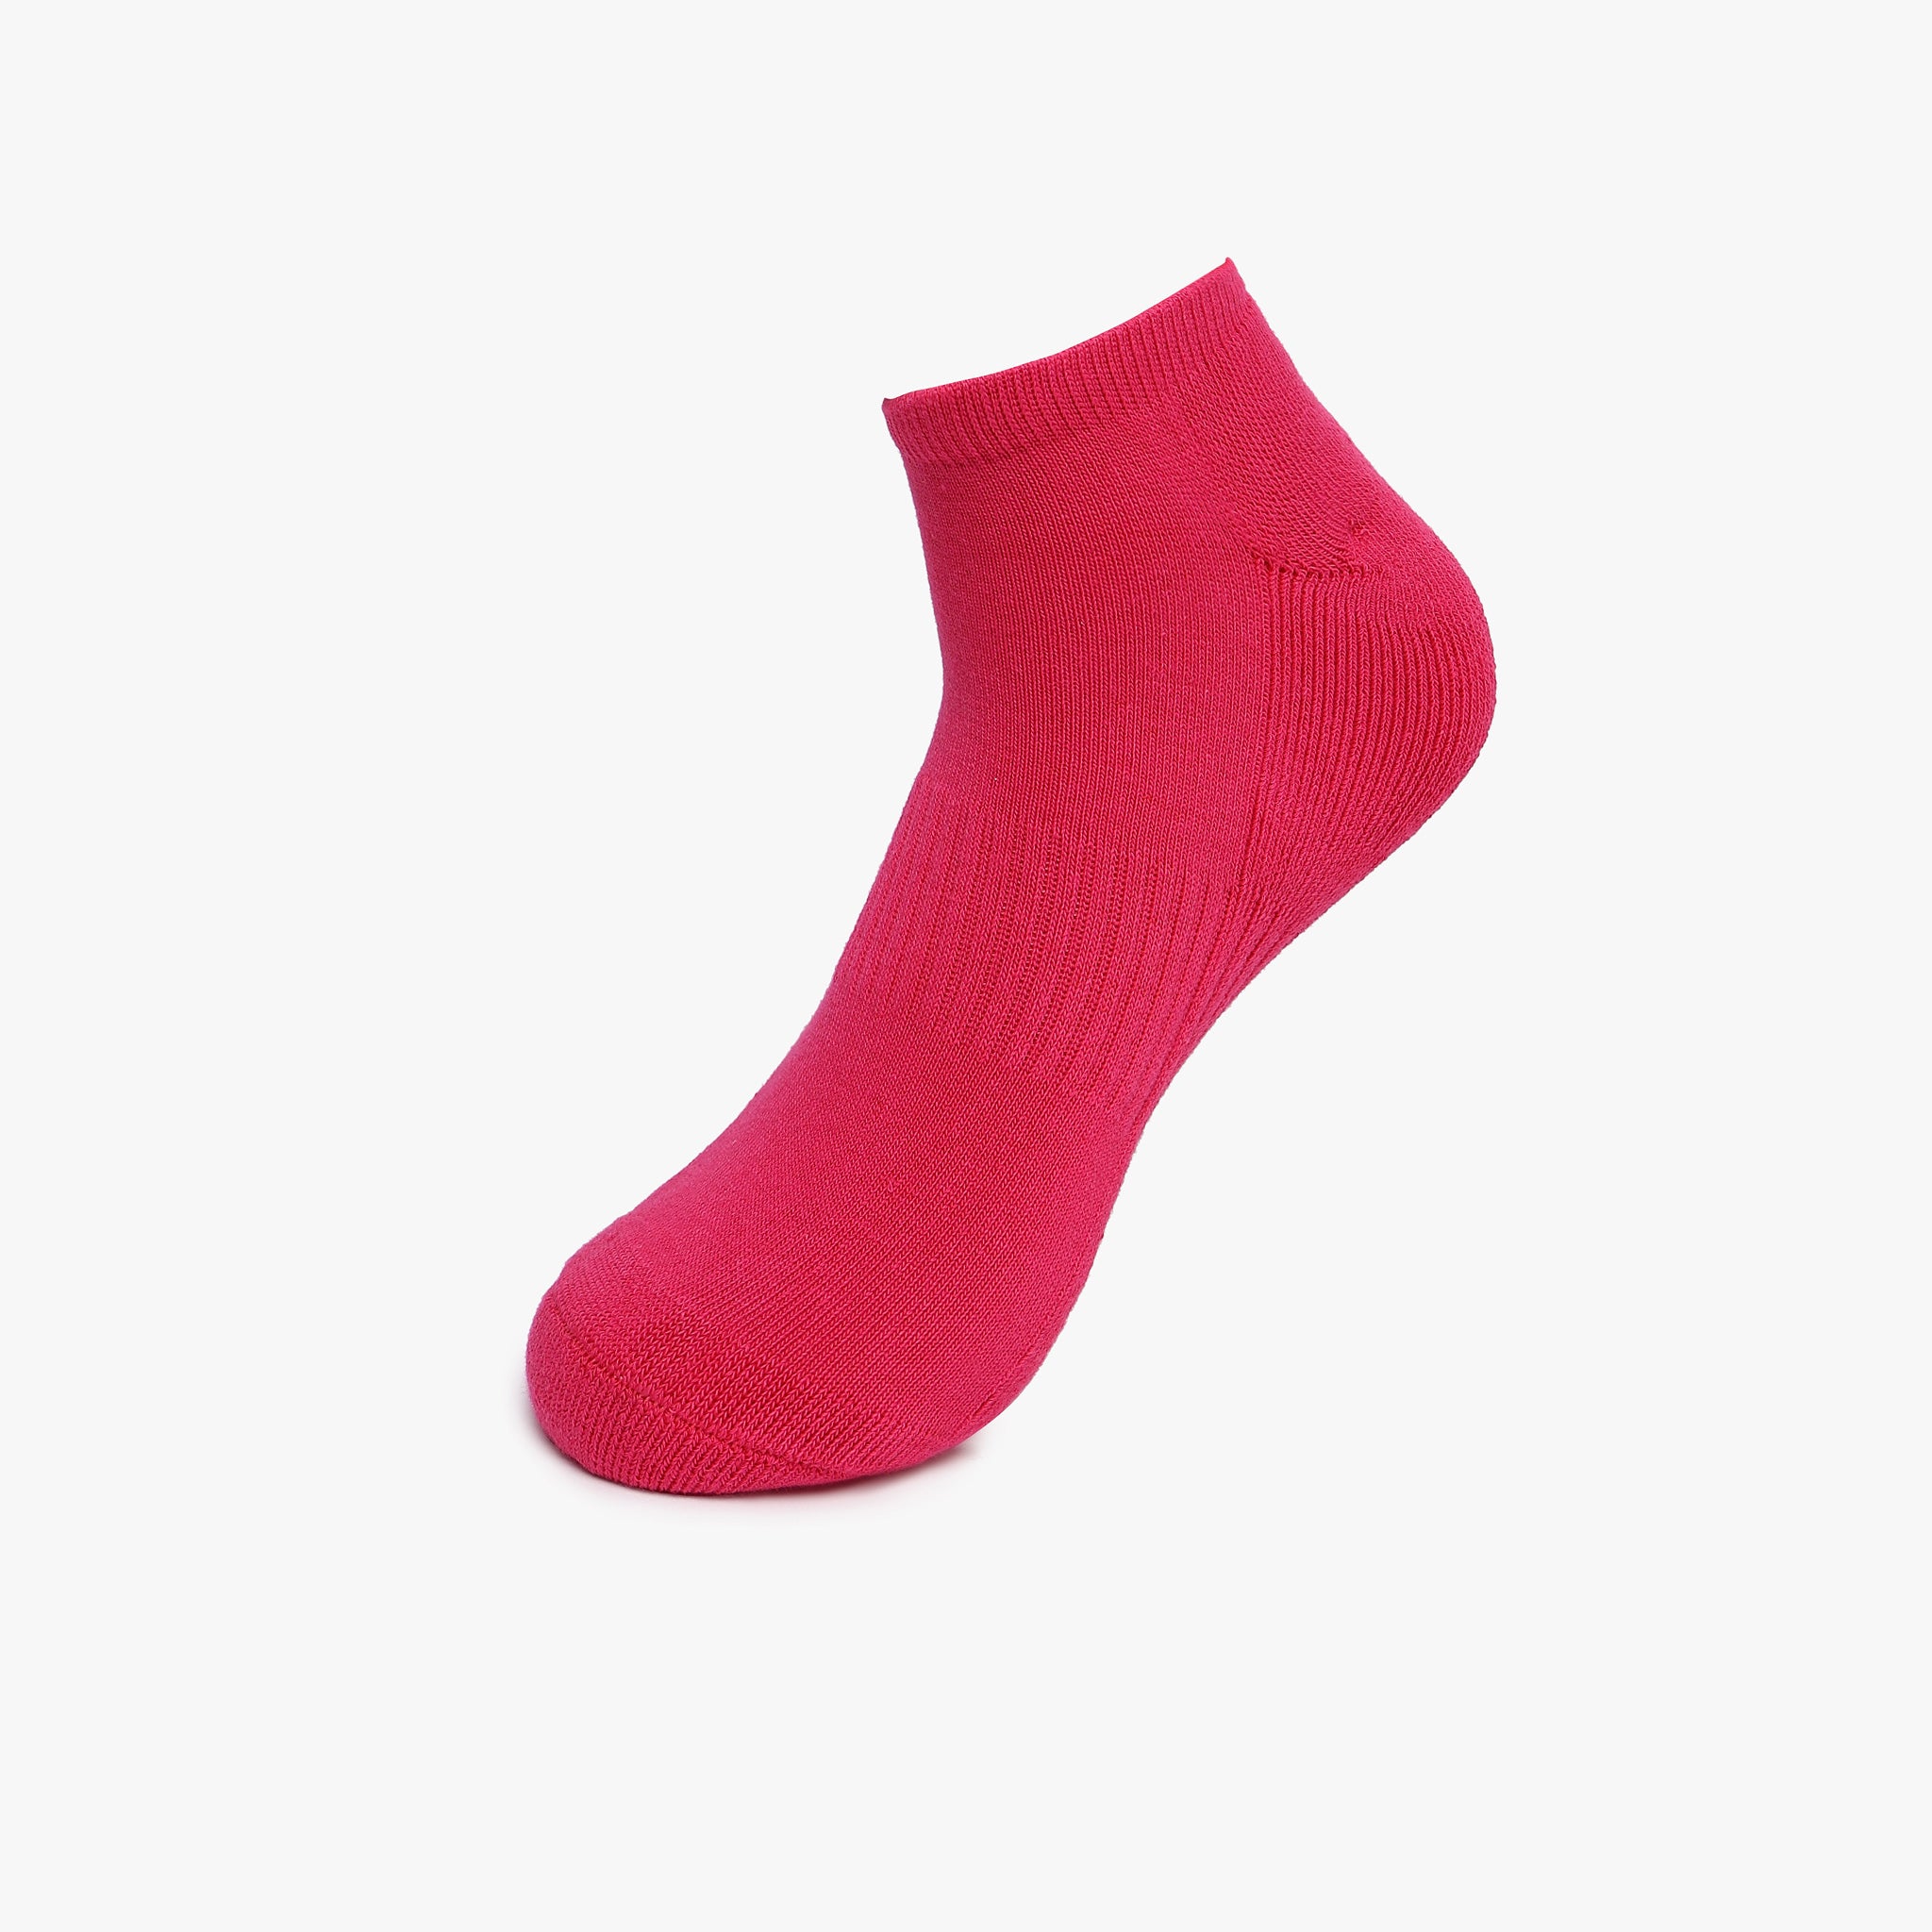 Womens Cotton Ankle Length Socks